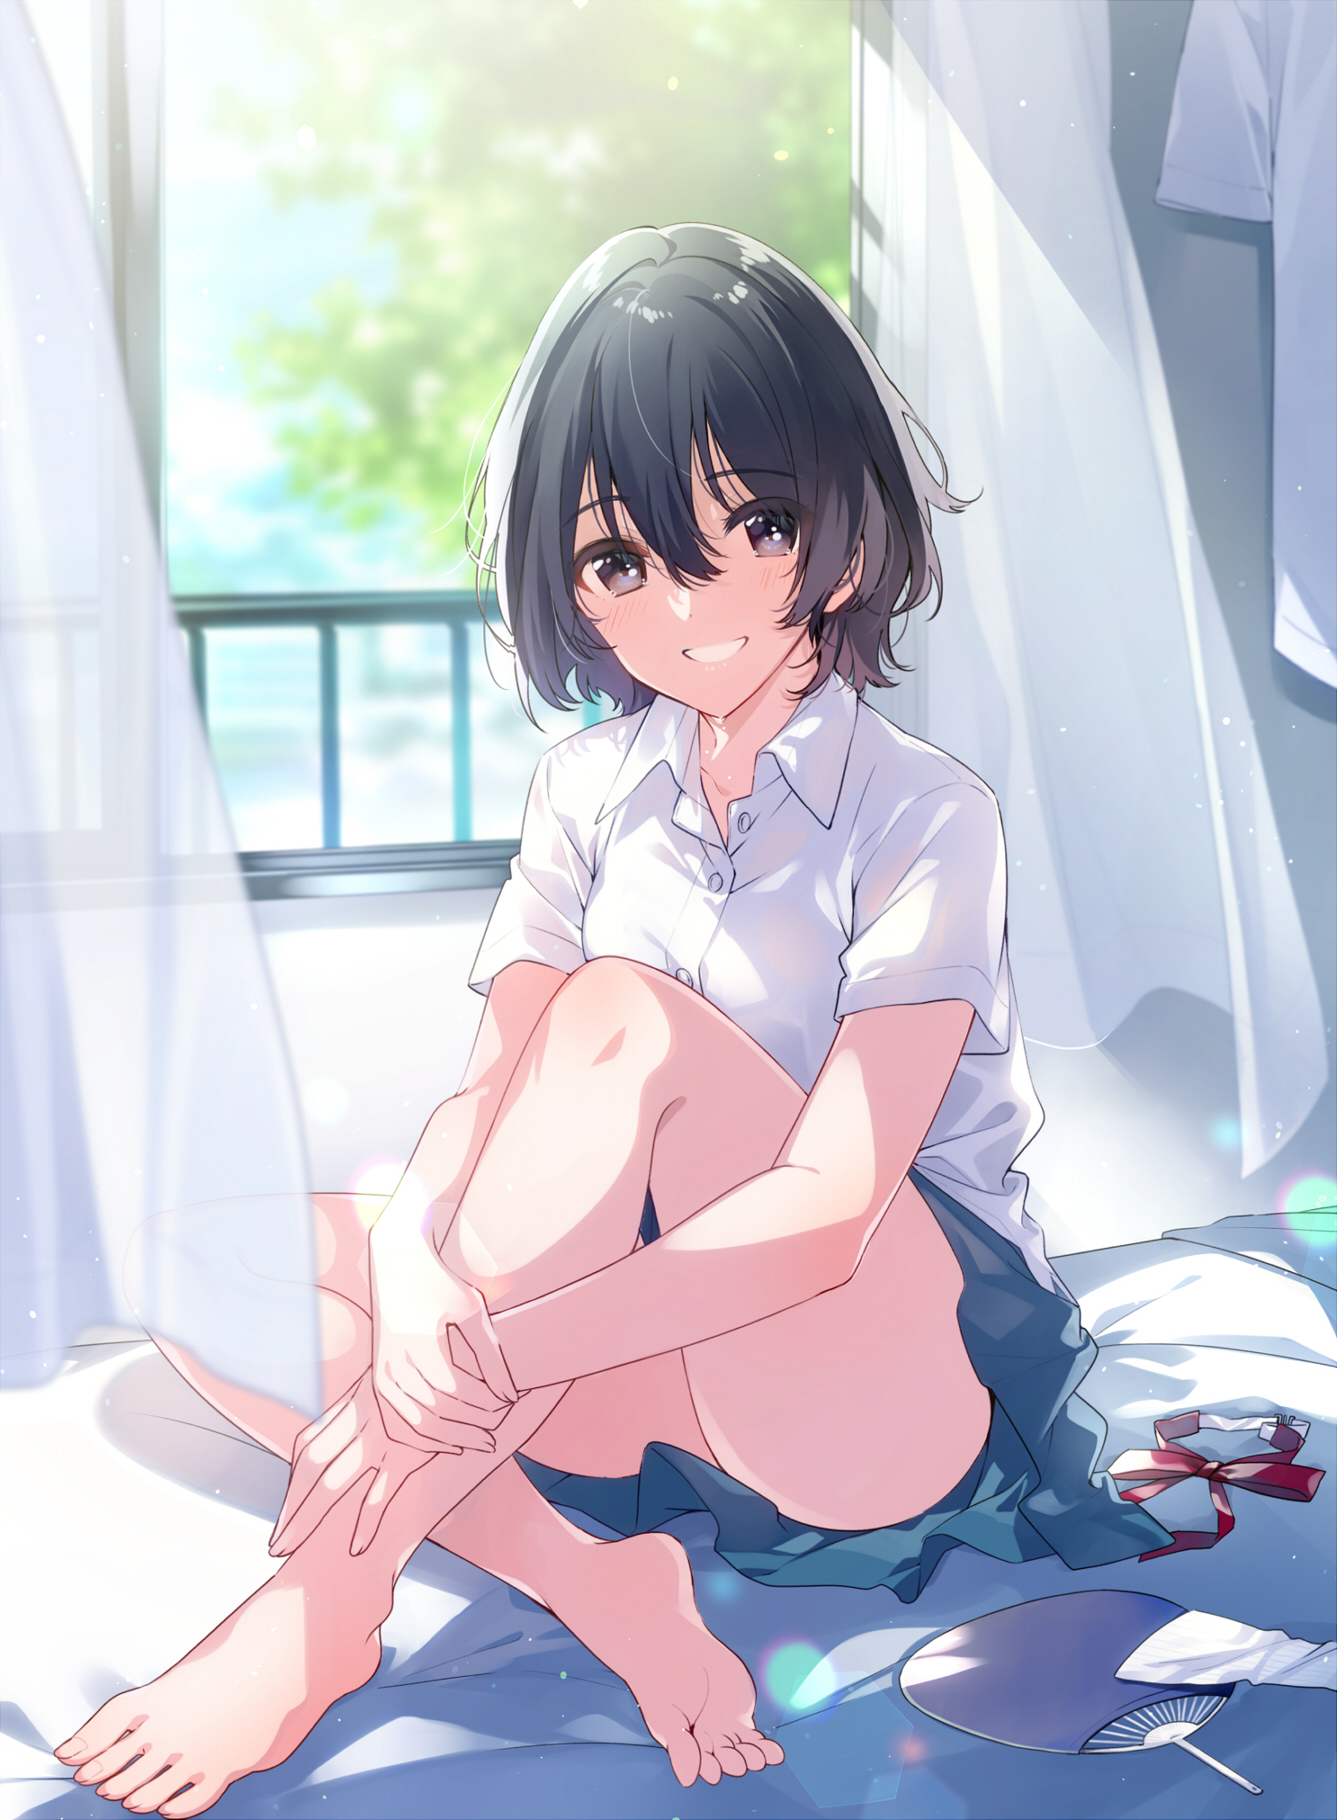 Anime 1337x1820 anime anime girls digital art artwork 2D portrait display barefoot short hair dark hair dark eyes smiling in bed school uniform u35